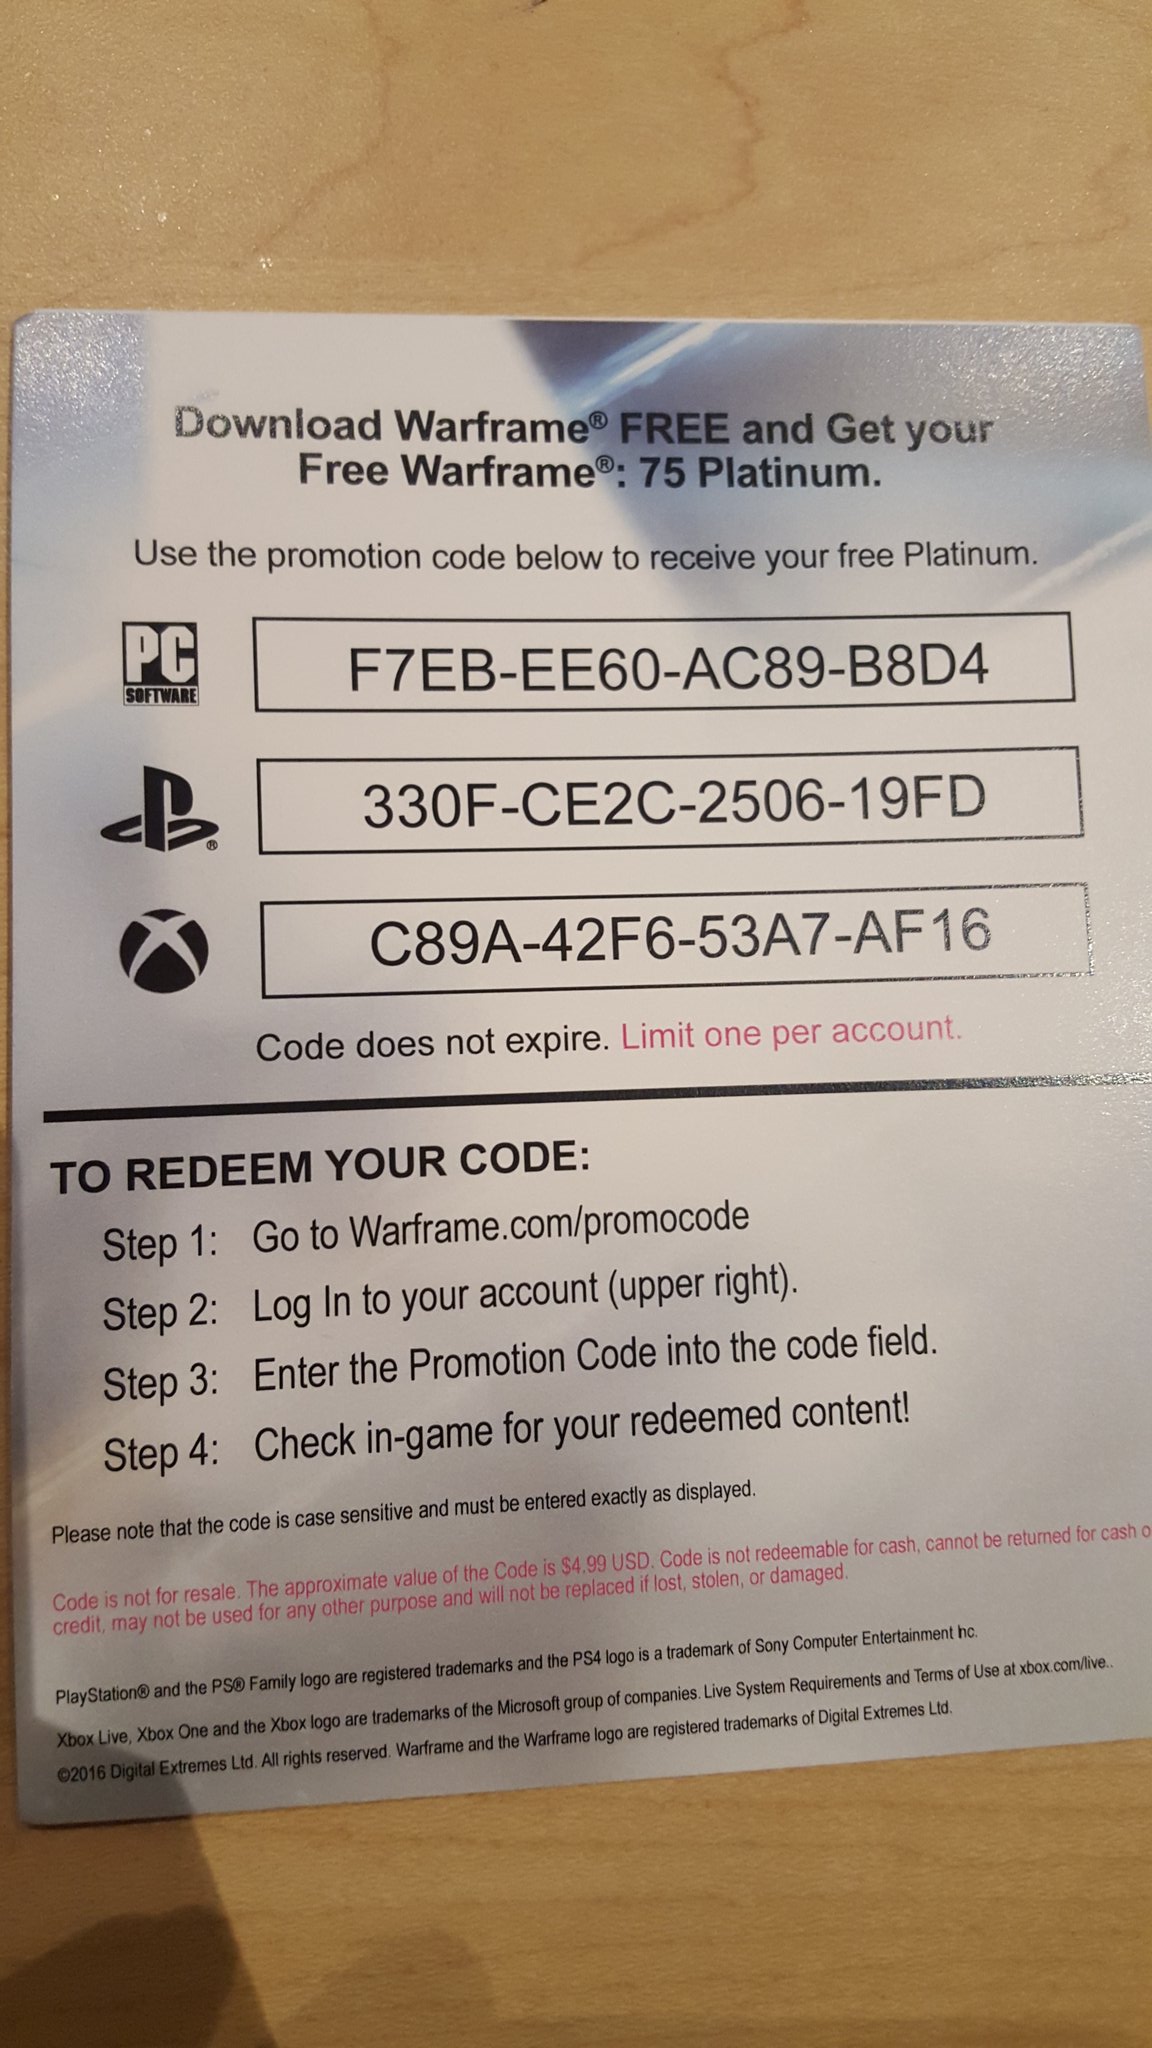 Warframe Rafle 25 codes to win 1,000 Platinum Promo Codes